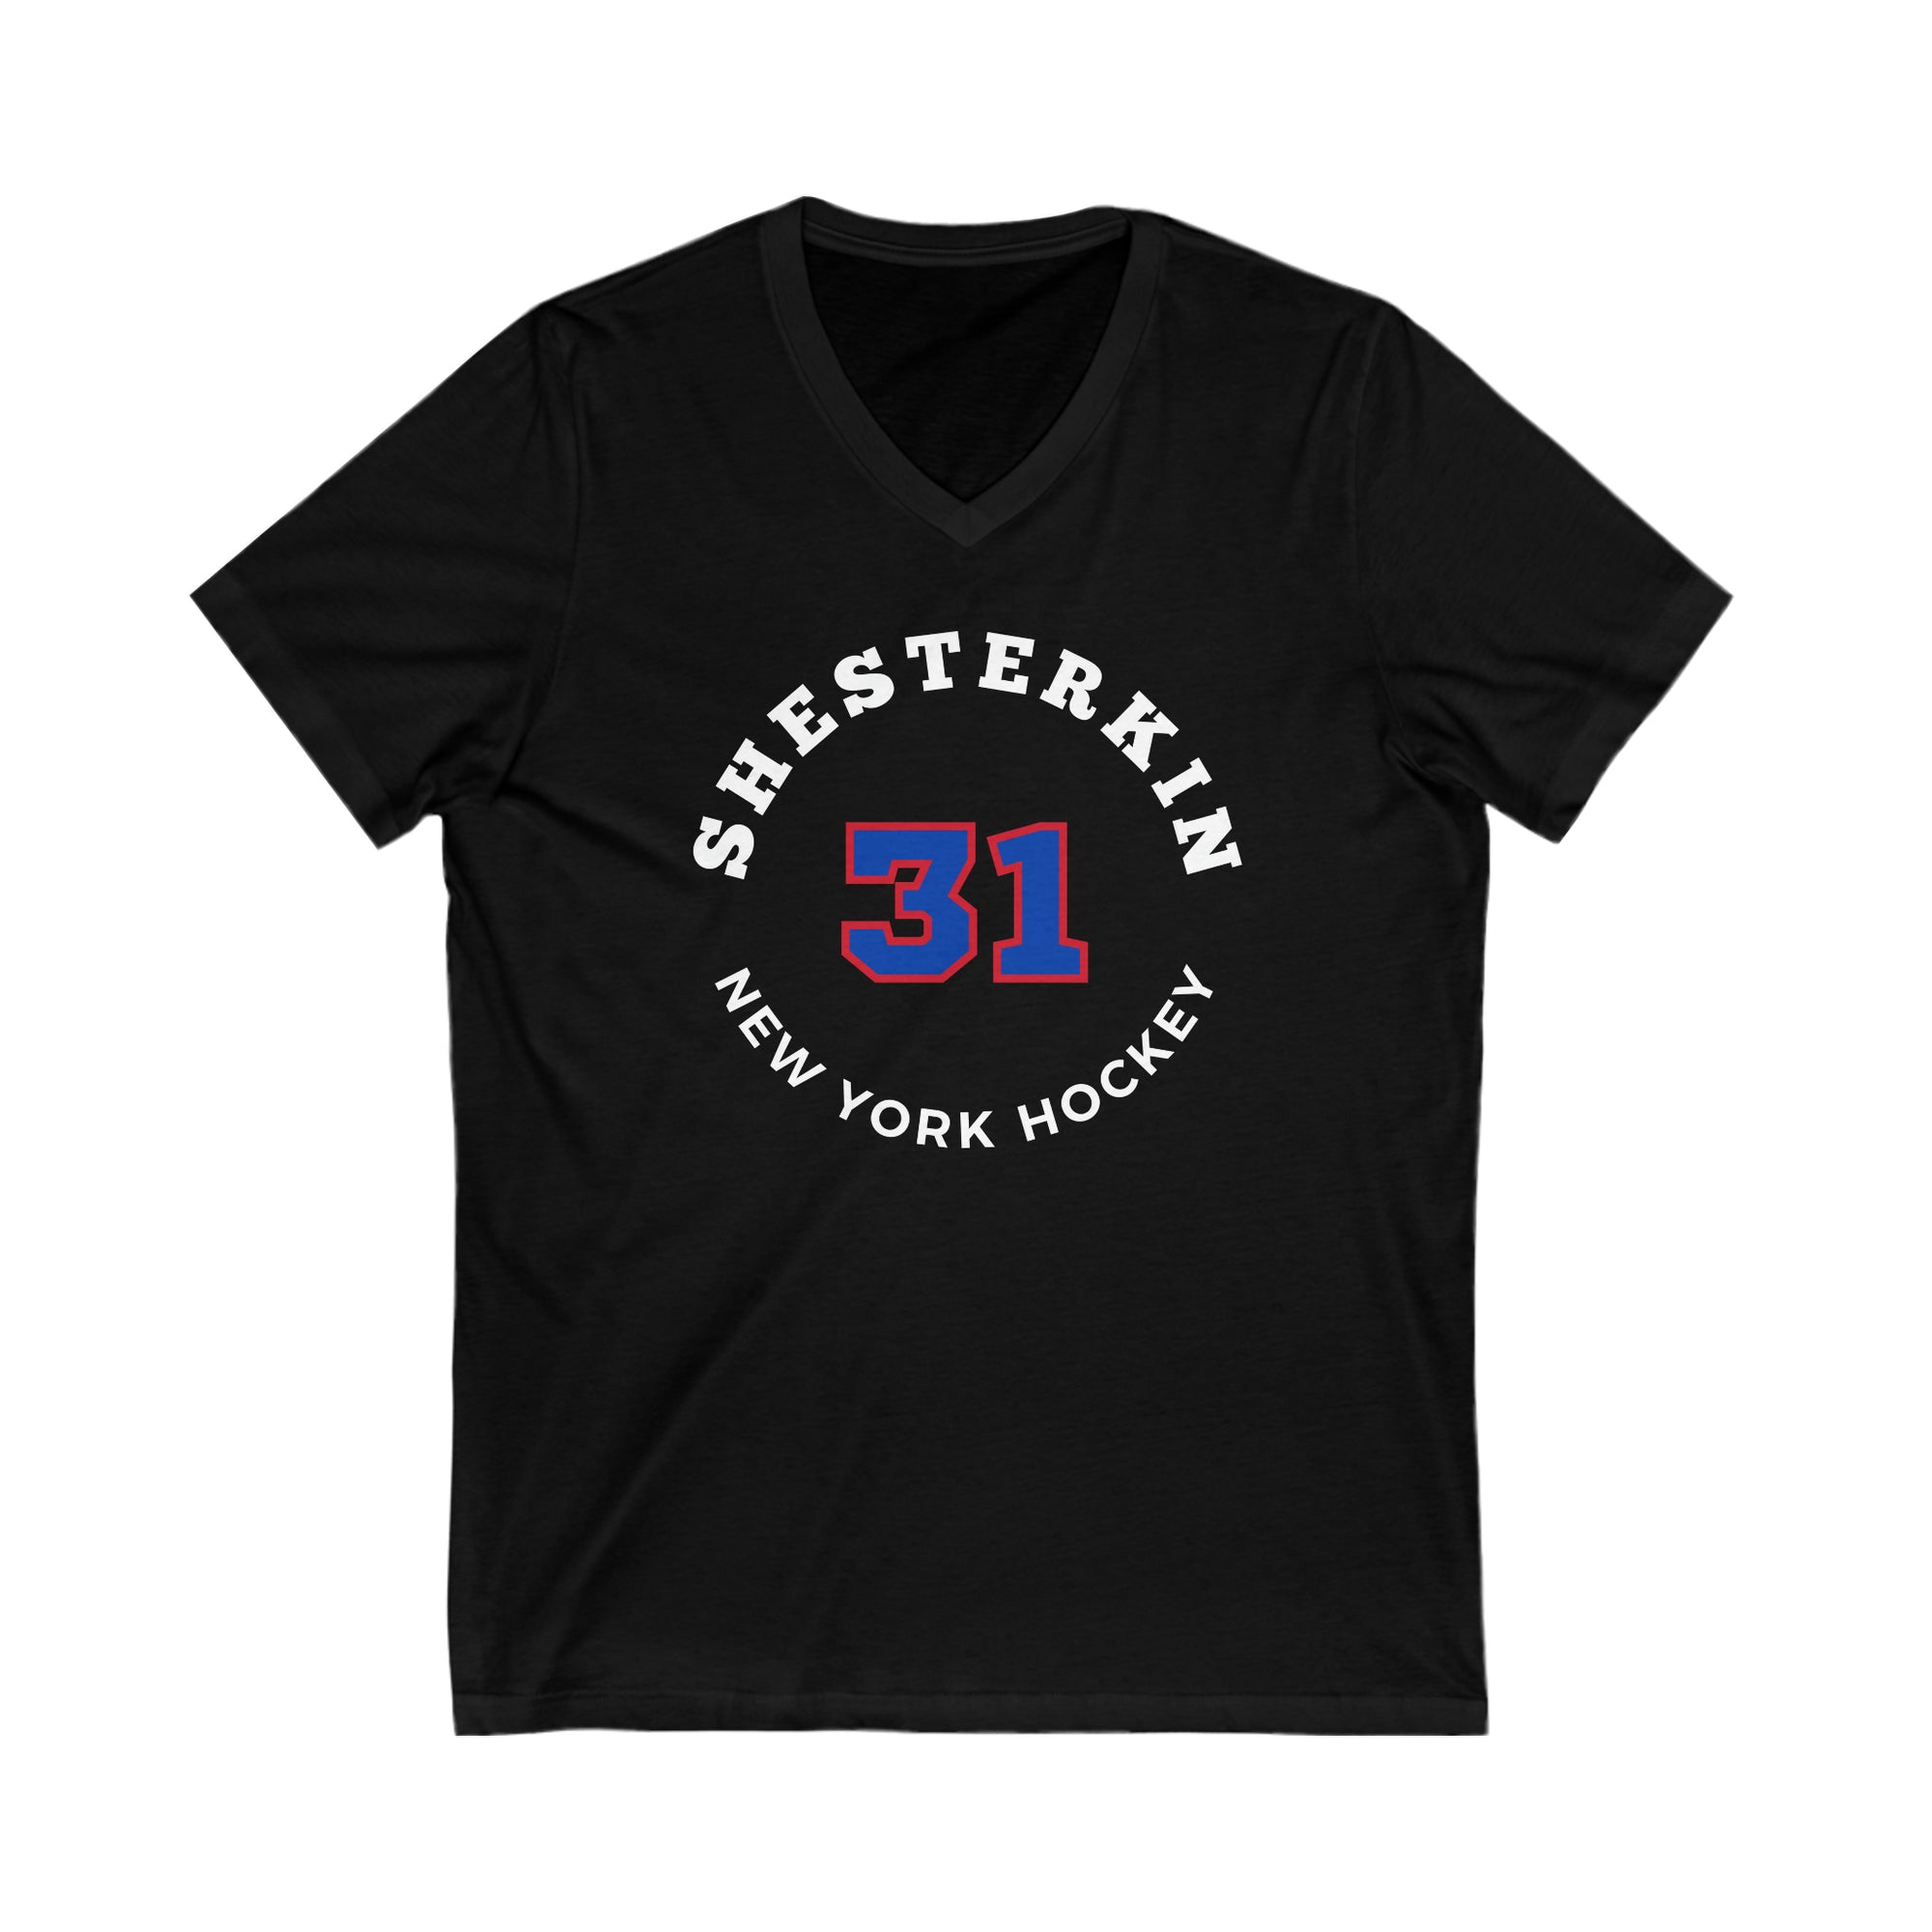 Shesterkin 31 New York Hockey Number Arch Design Unisex V-Neck Tee